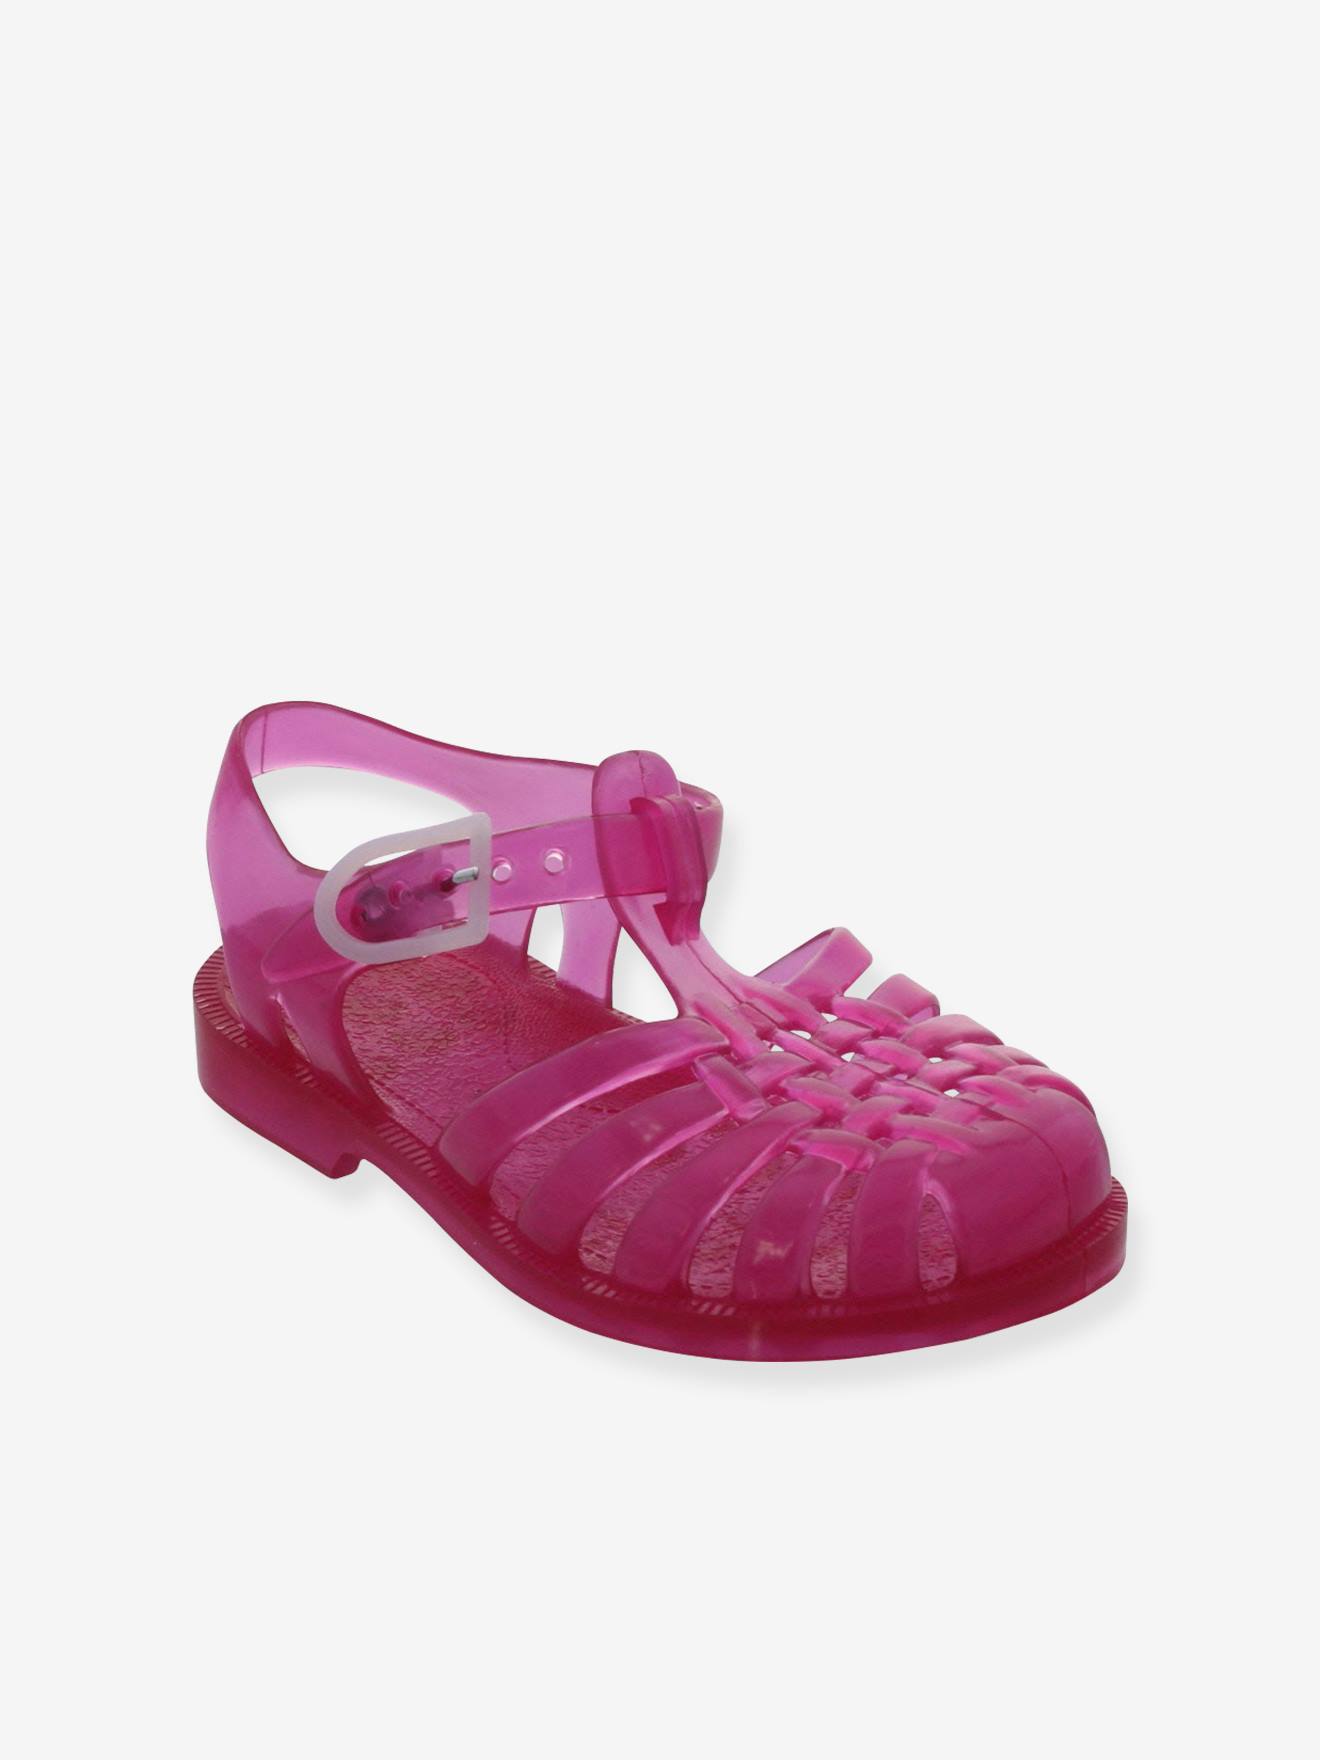 girls plastic sandals